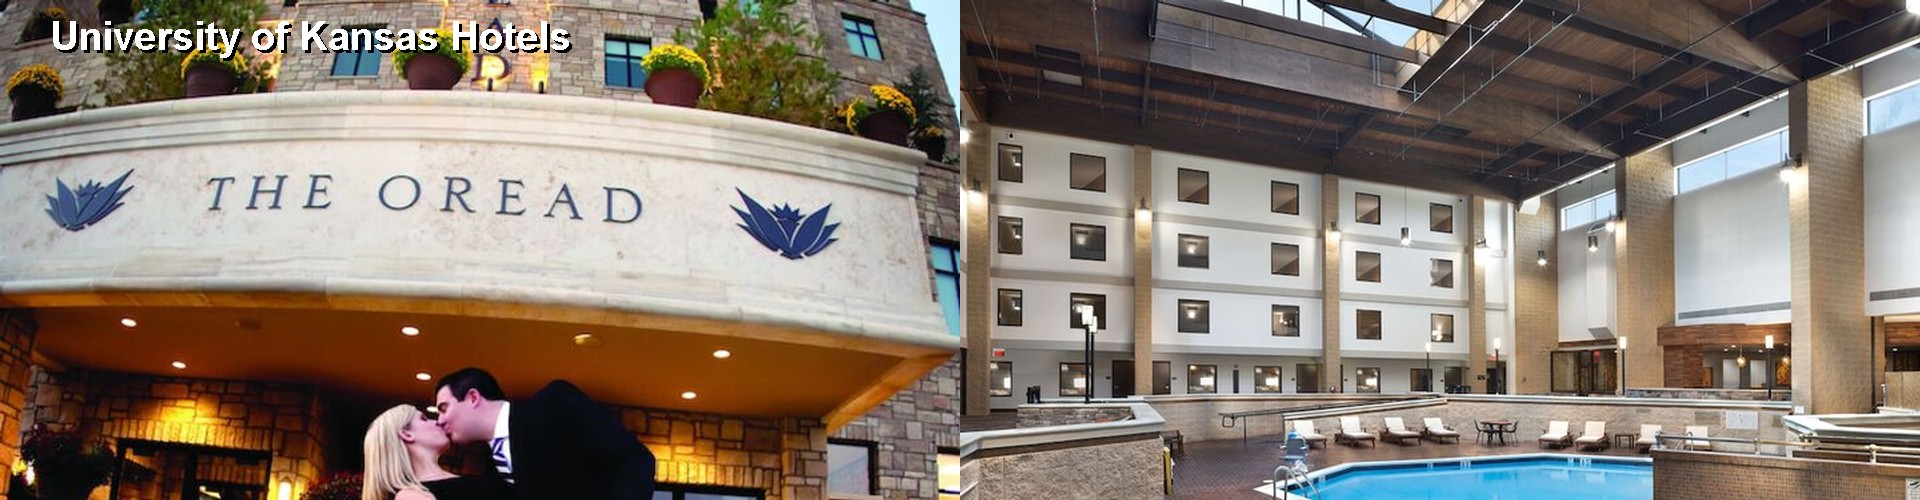 3 Best Hotels near University of Kansas